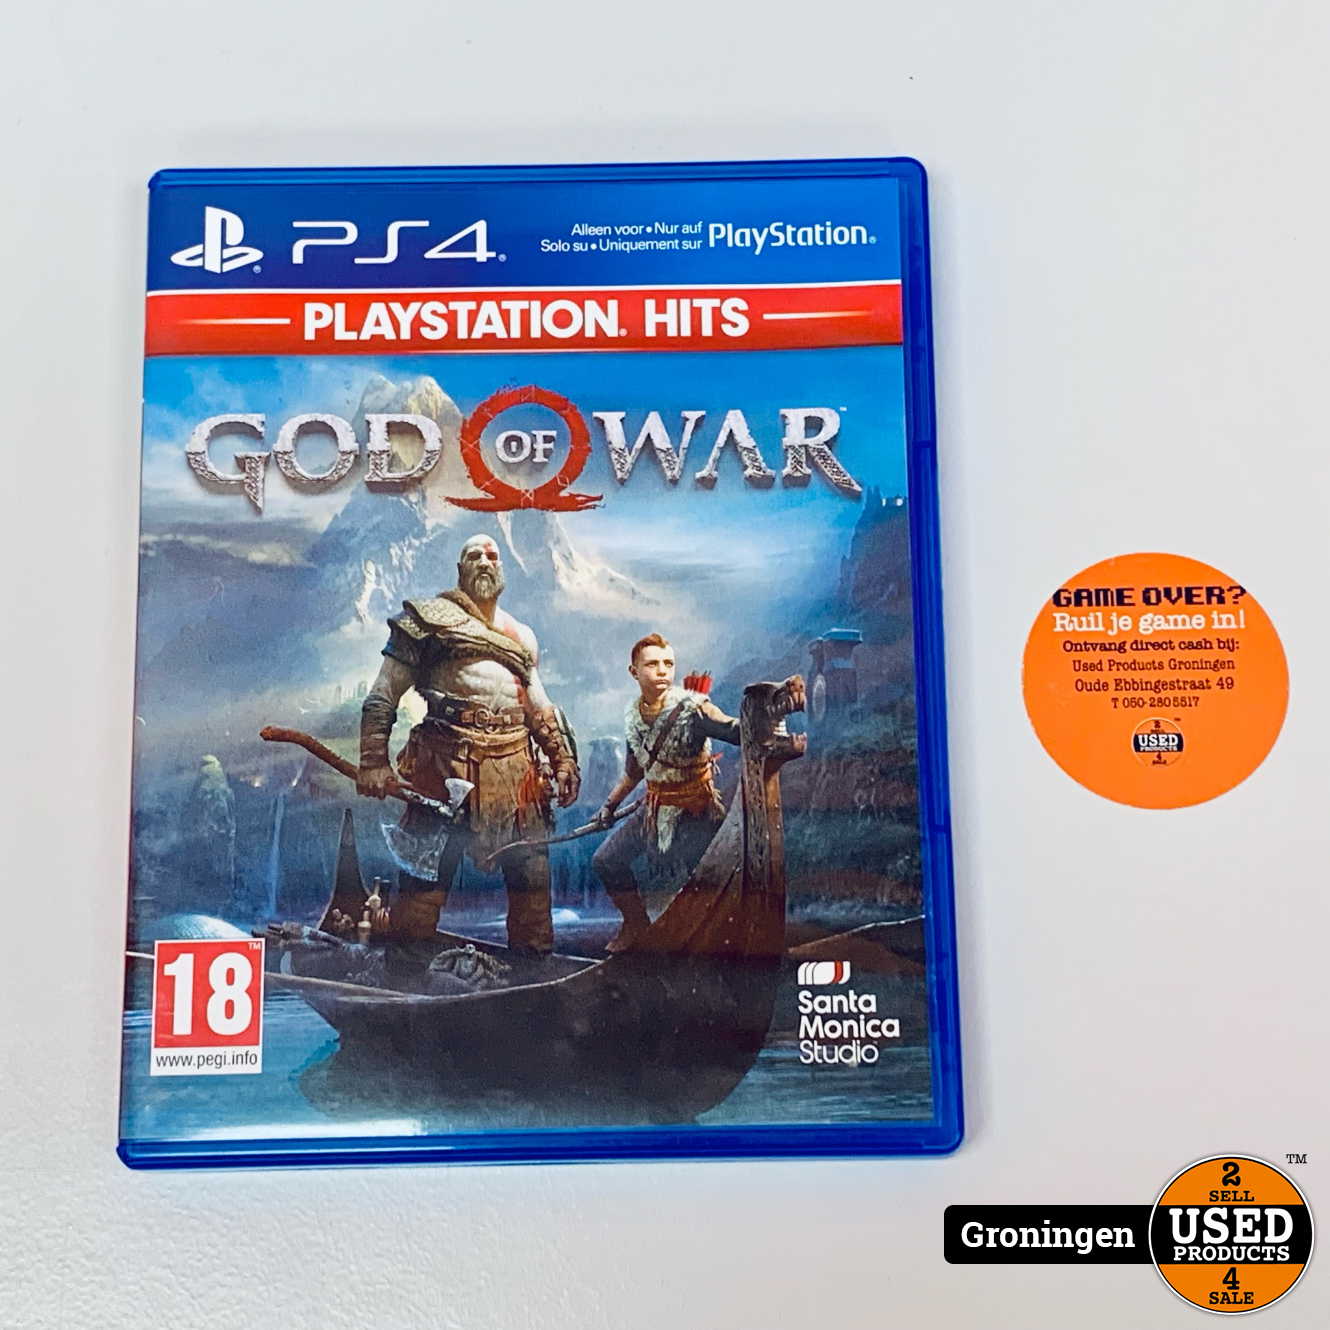 Vochtigheid Grazen huiswerk maken Sony PS4 [PS4] God of War - PlayStation Hits - Used Products Groningen